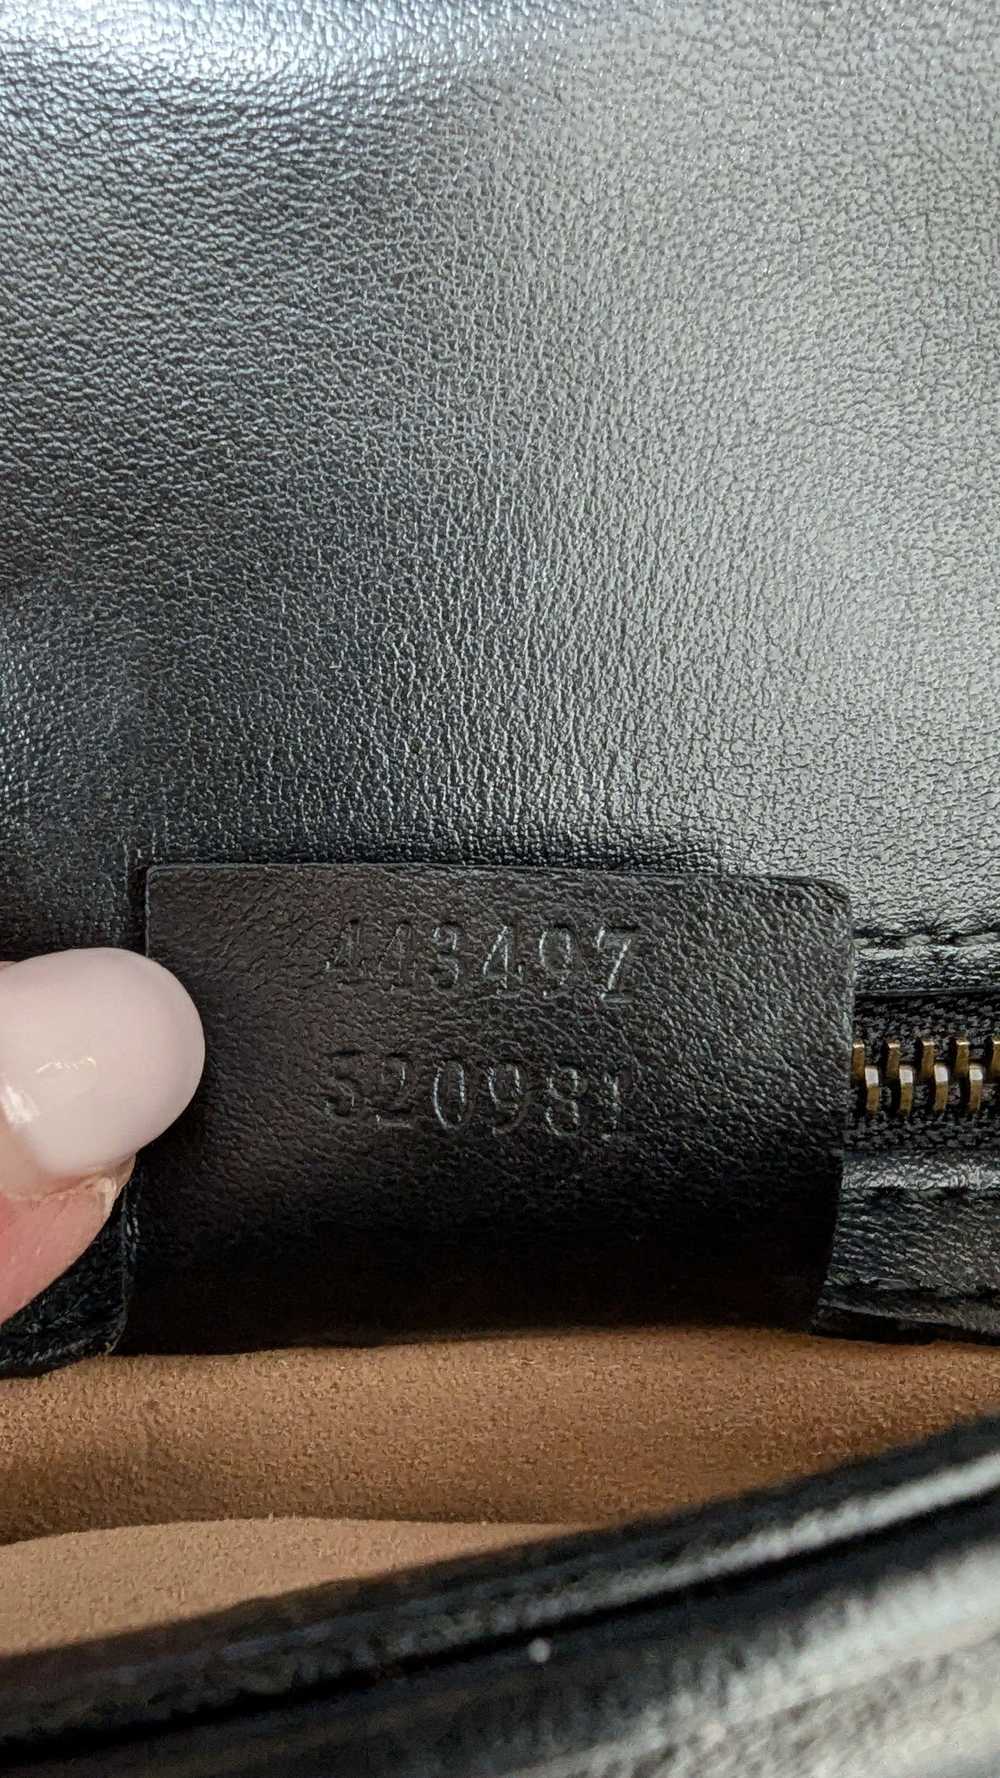 Product Details Gucci Black Leather Medium Marmont - image 9